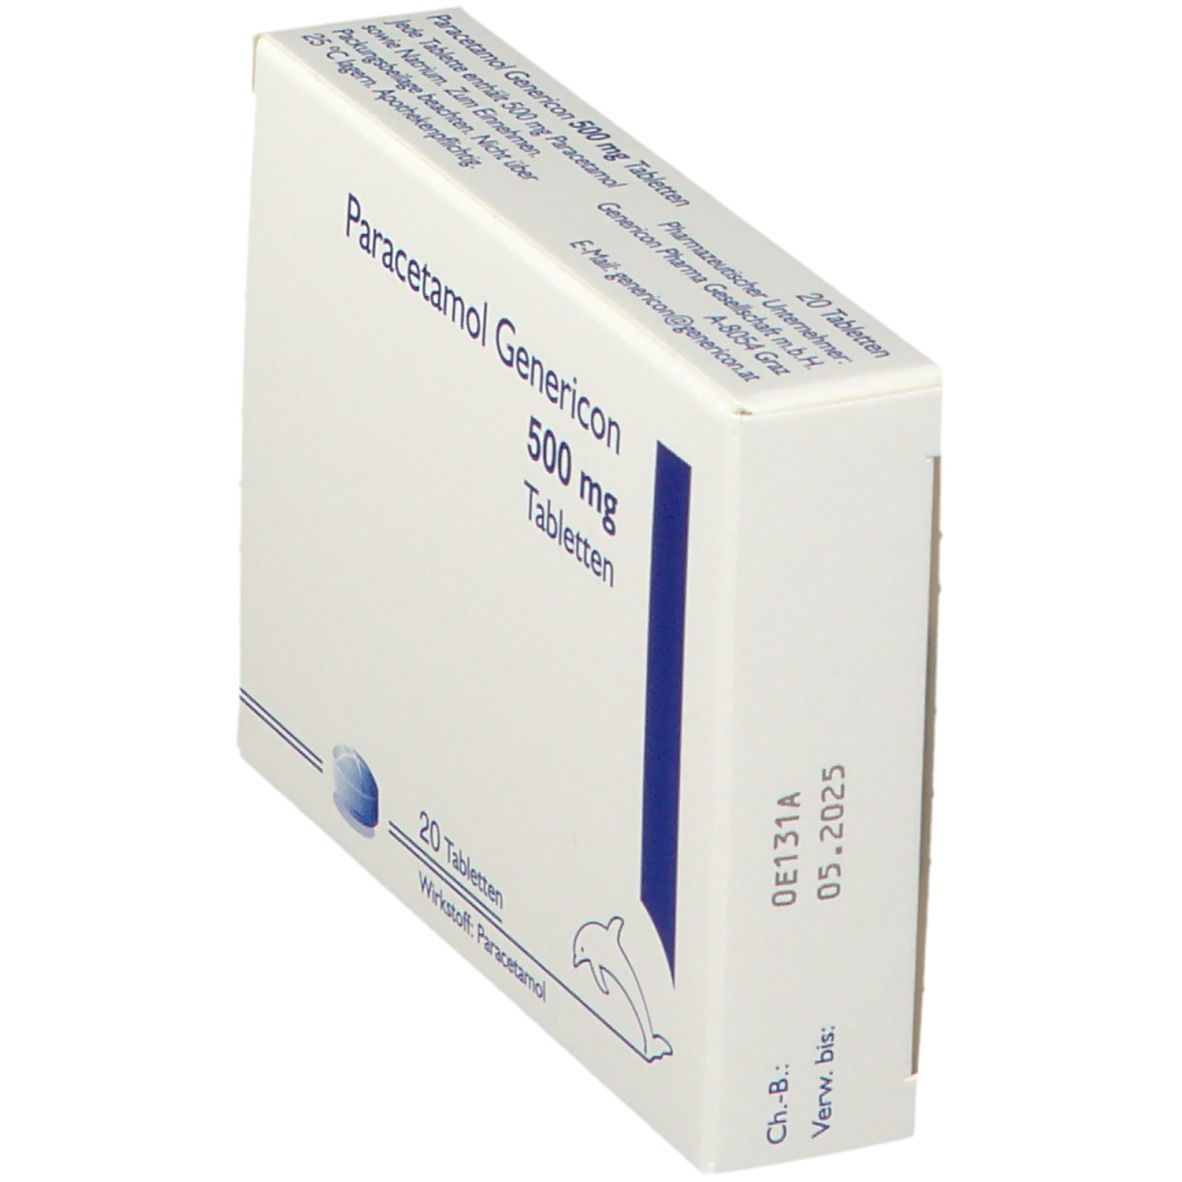 Paracetamol Genericon 500mg